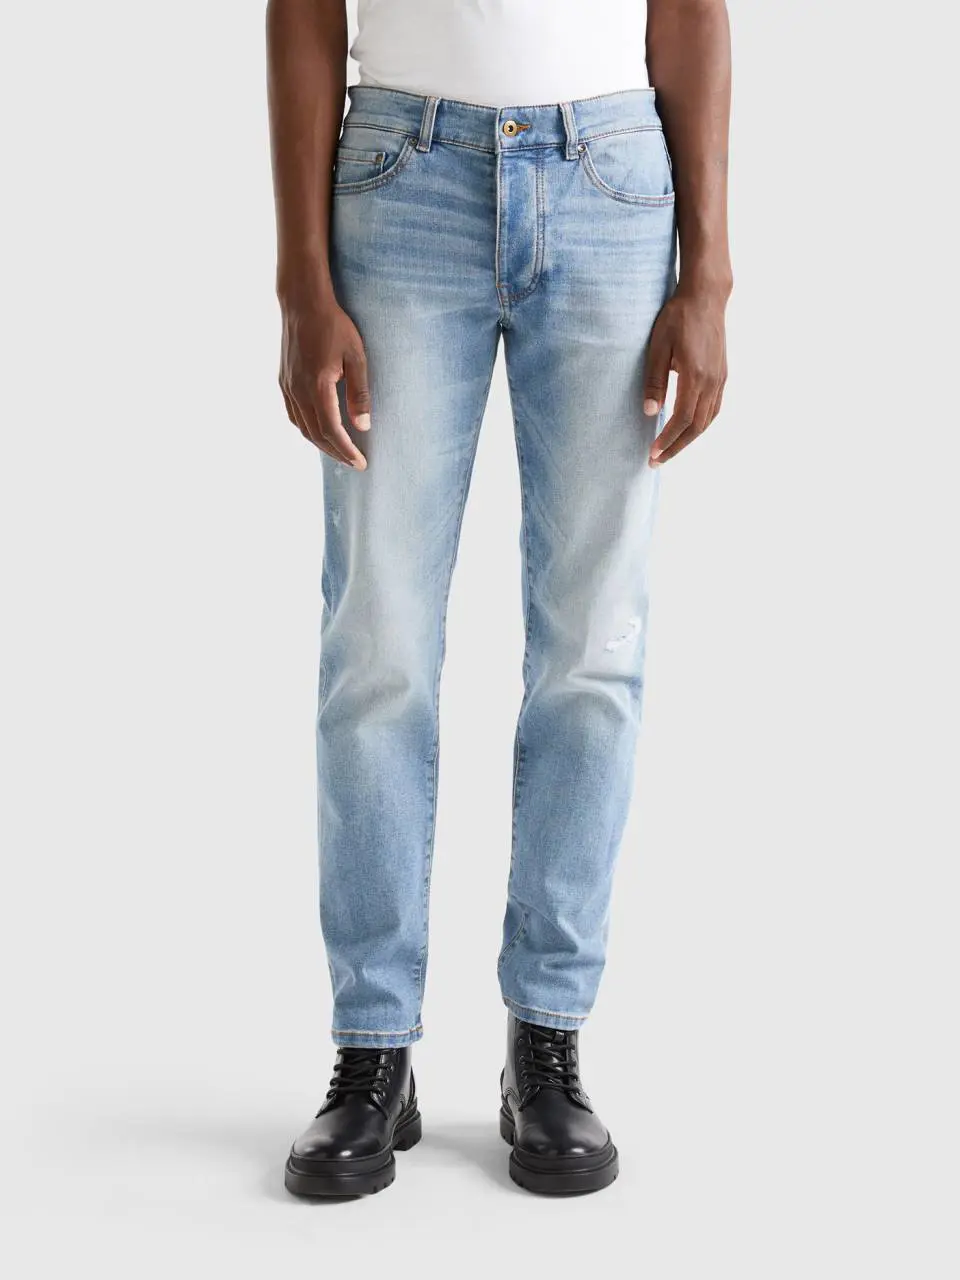 Benetton slim fit jeans. 1